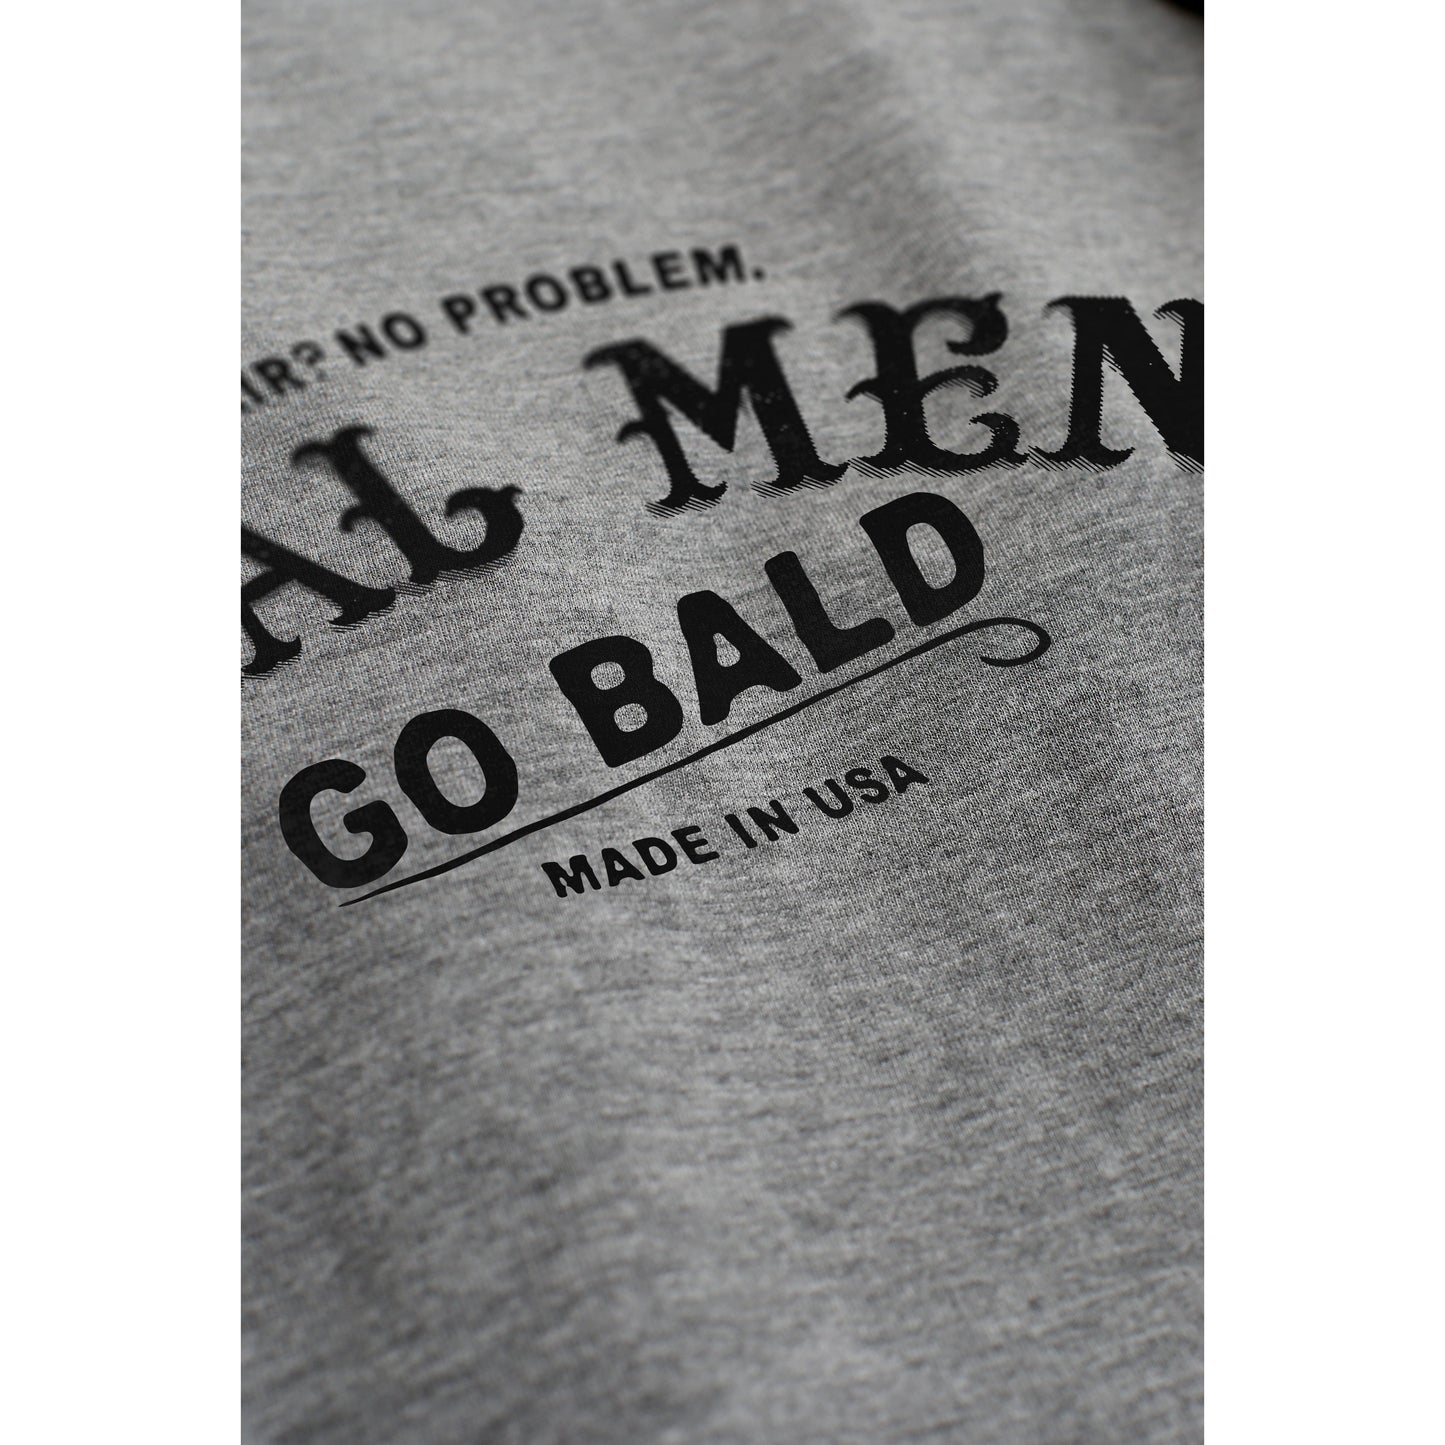 Real Men Go Bald Heather Grey Printed Graphic Men's Crew T-Shirt Tee Closeup Details